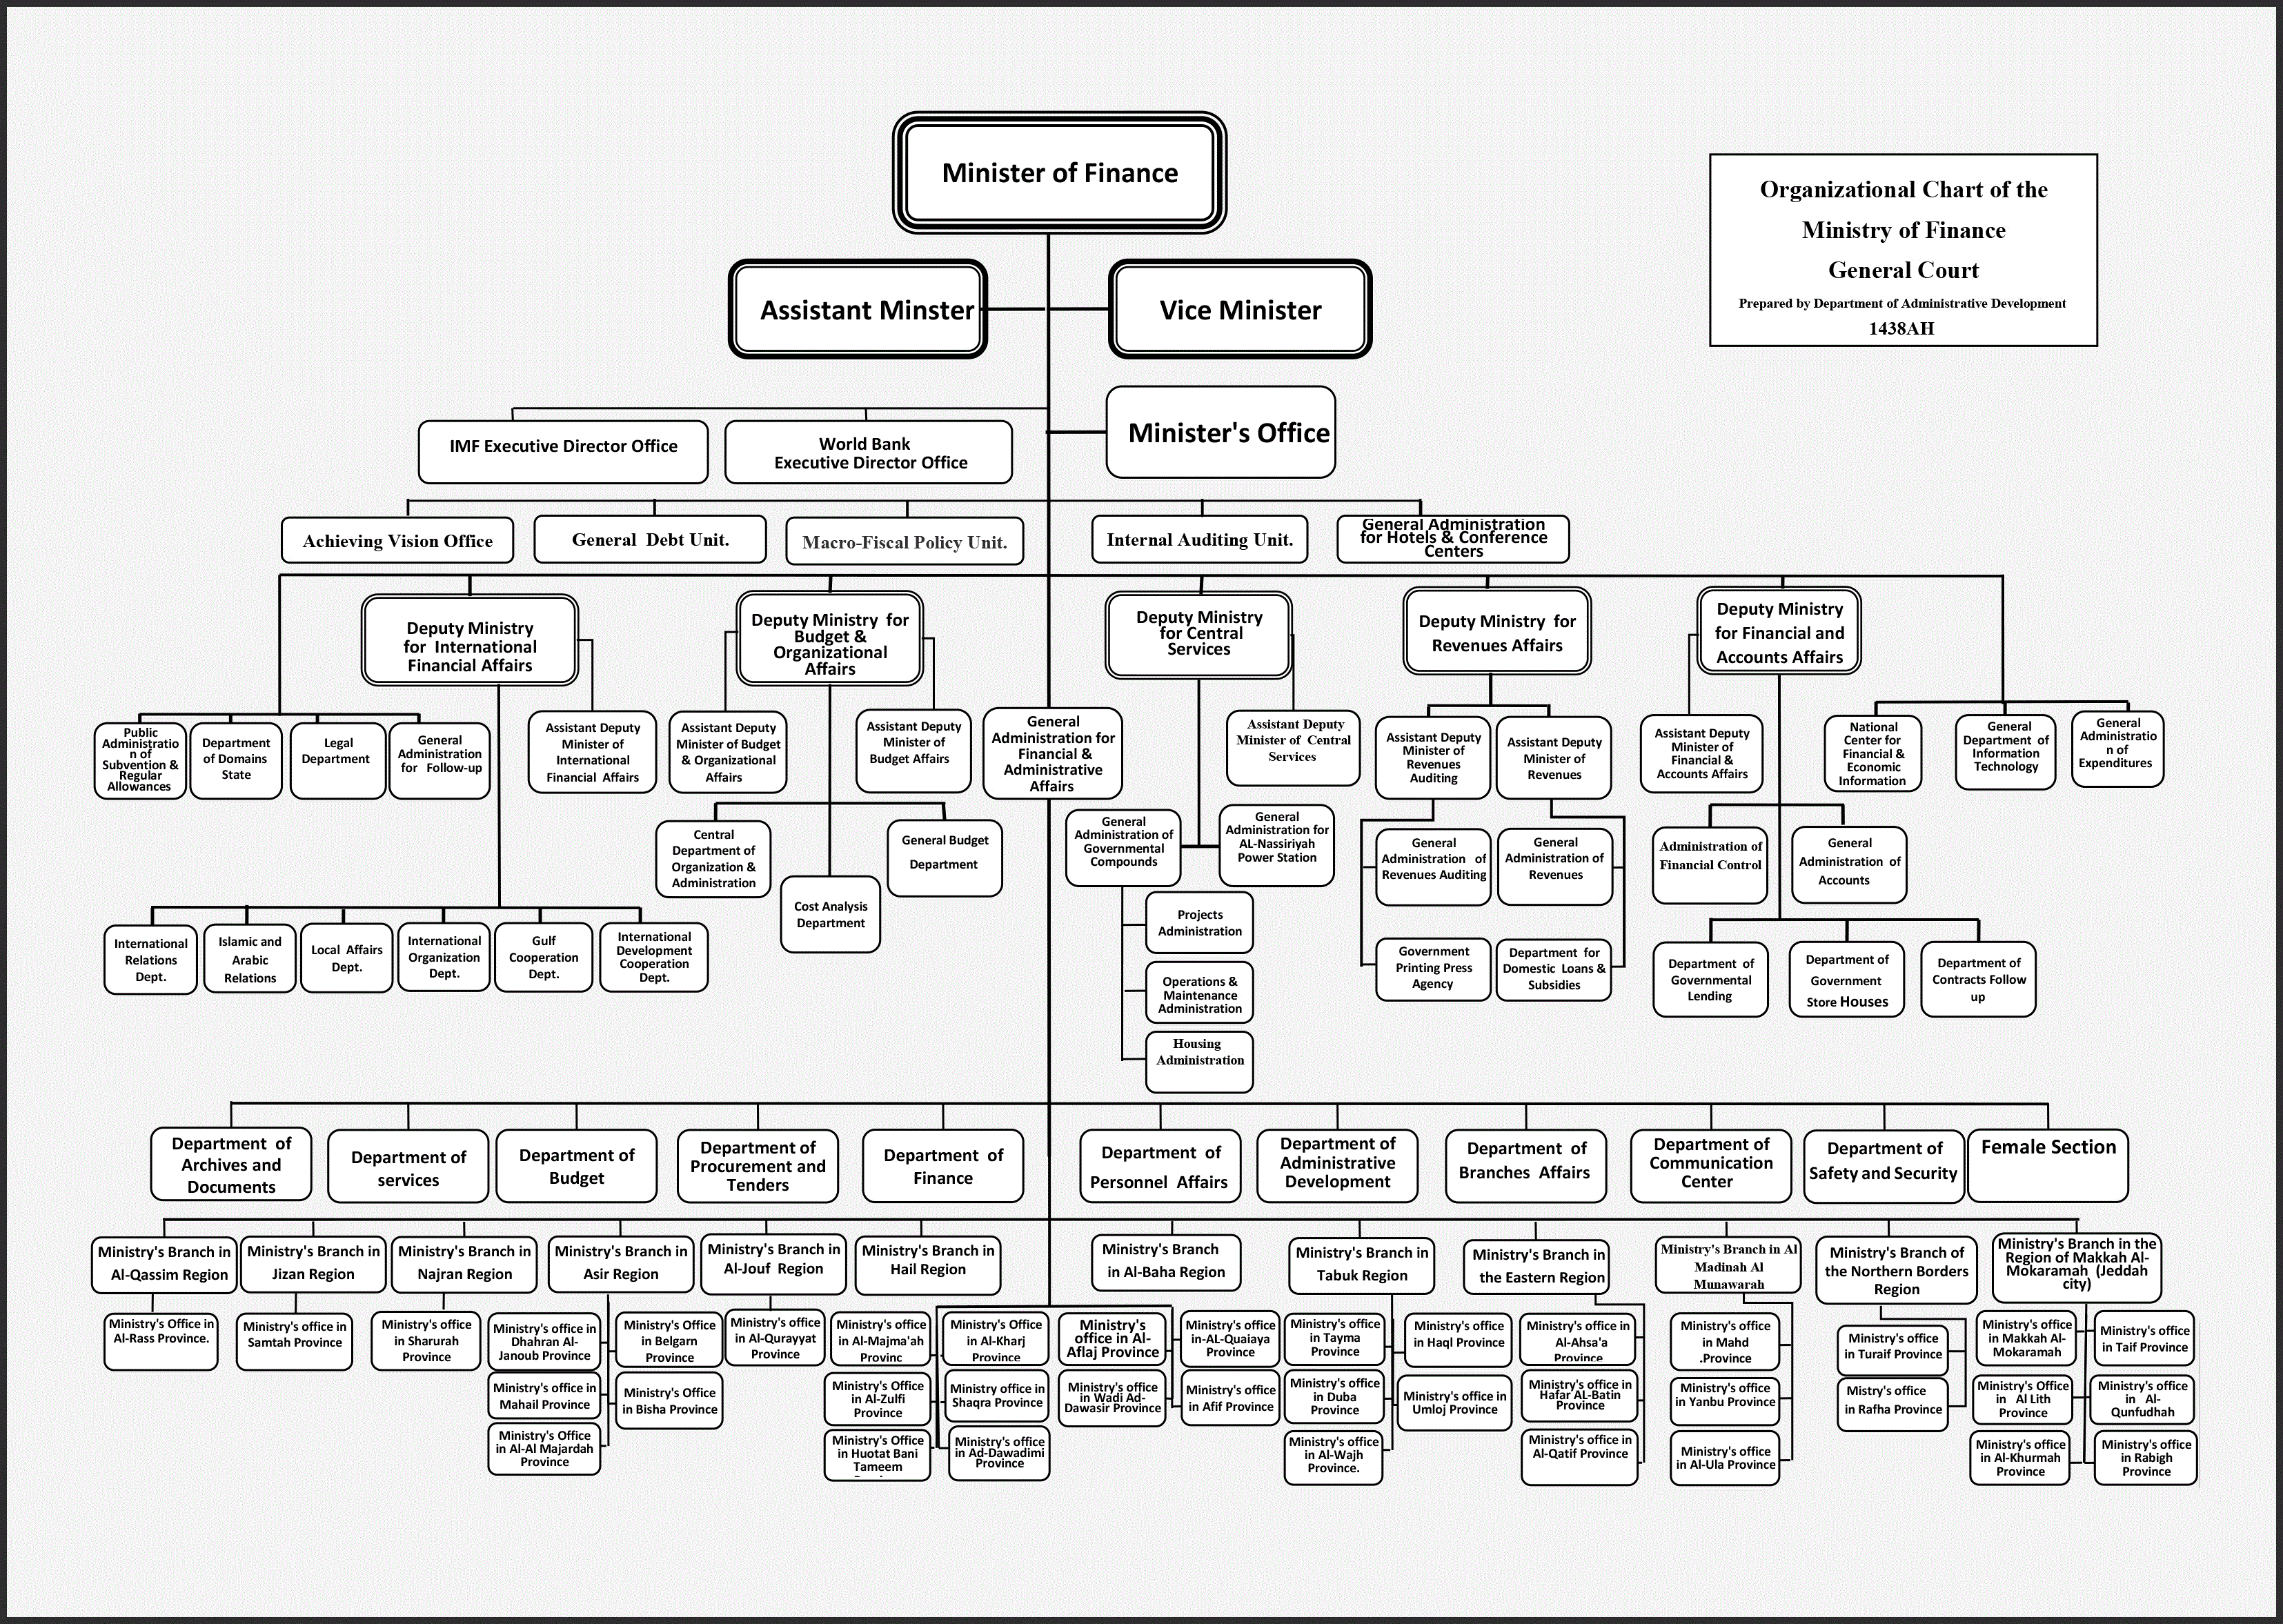 HierarchalOrganizationEn2.gif